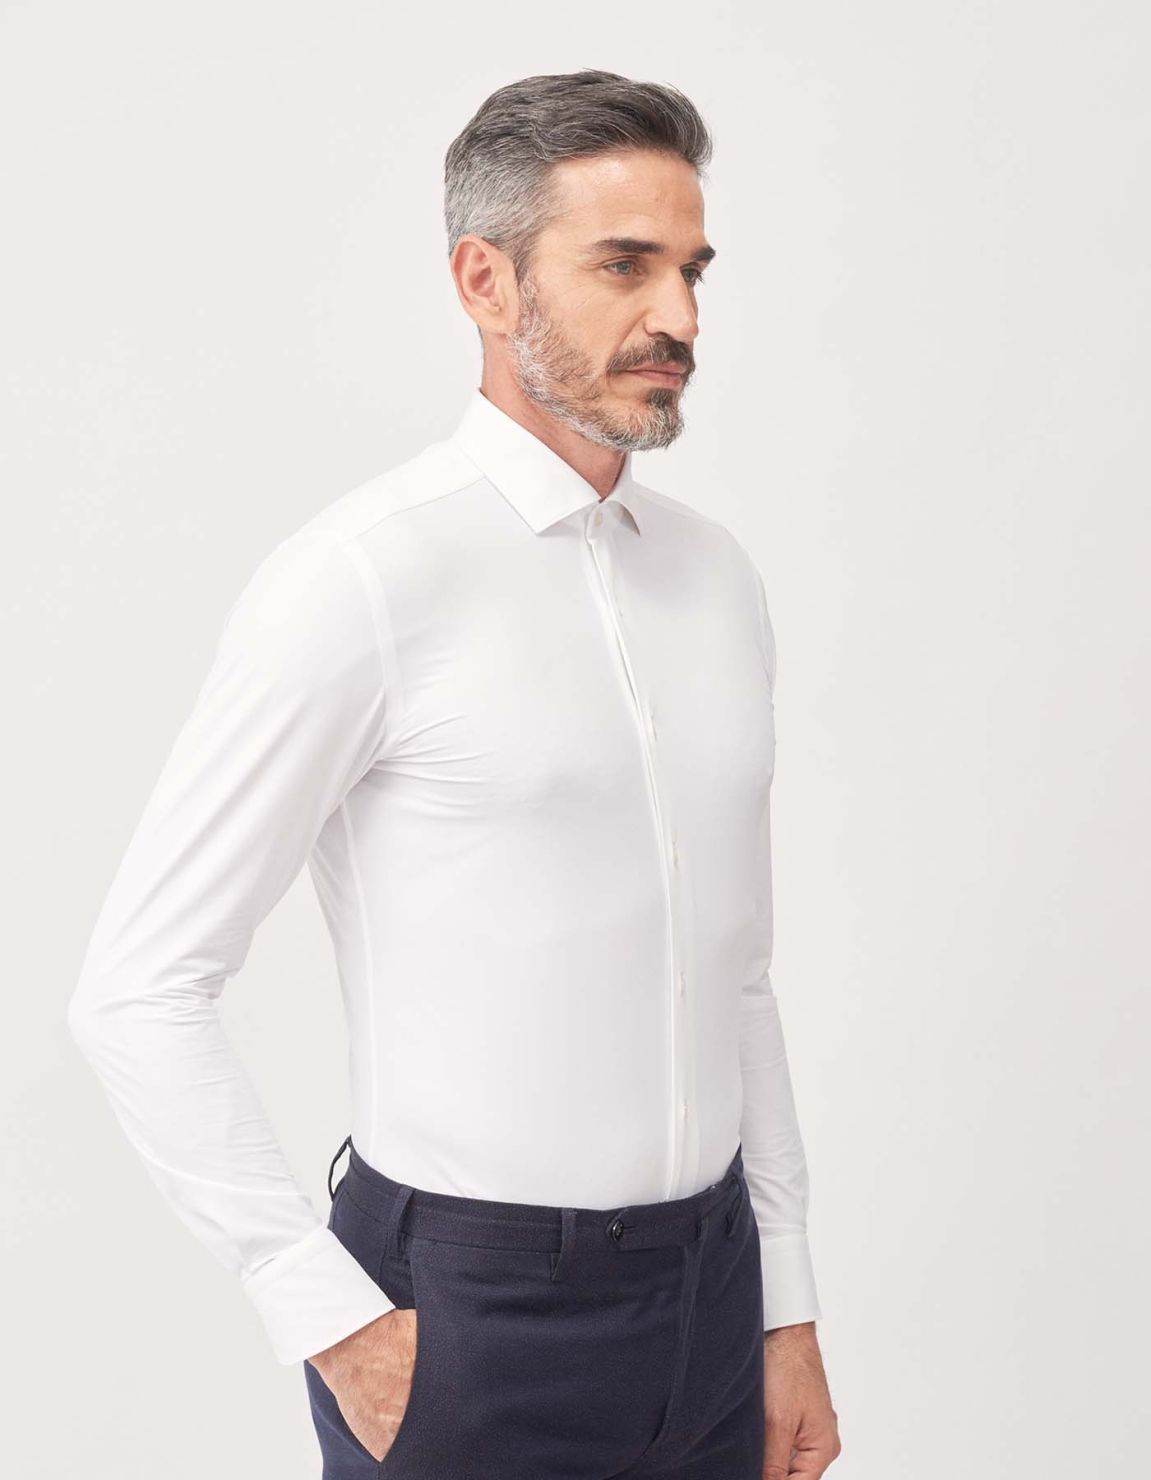 Shirt Collar small cutaway White Twill Tailor Custom Fit 1